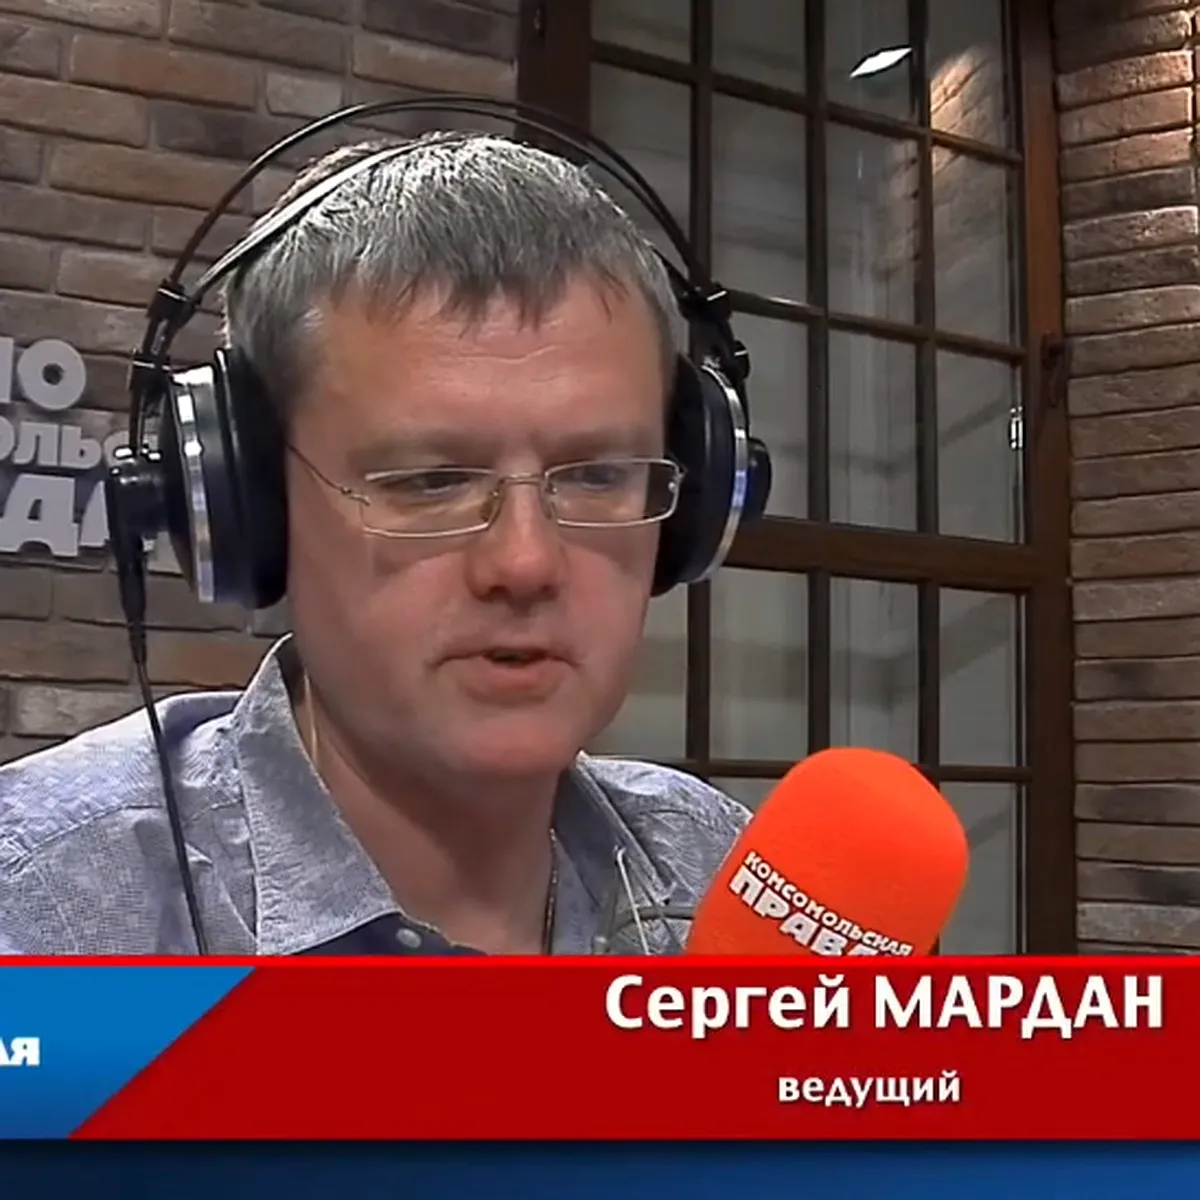 Сергей Мардан журналист Комсомольской правды